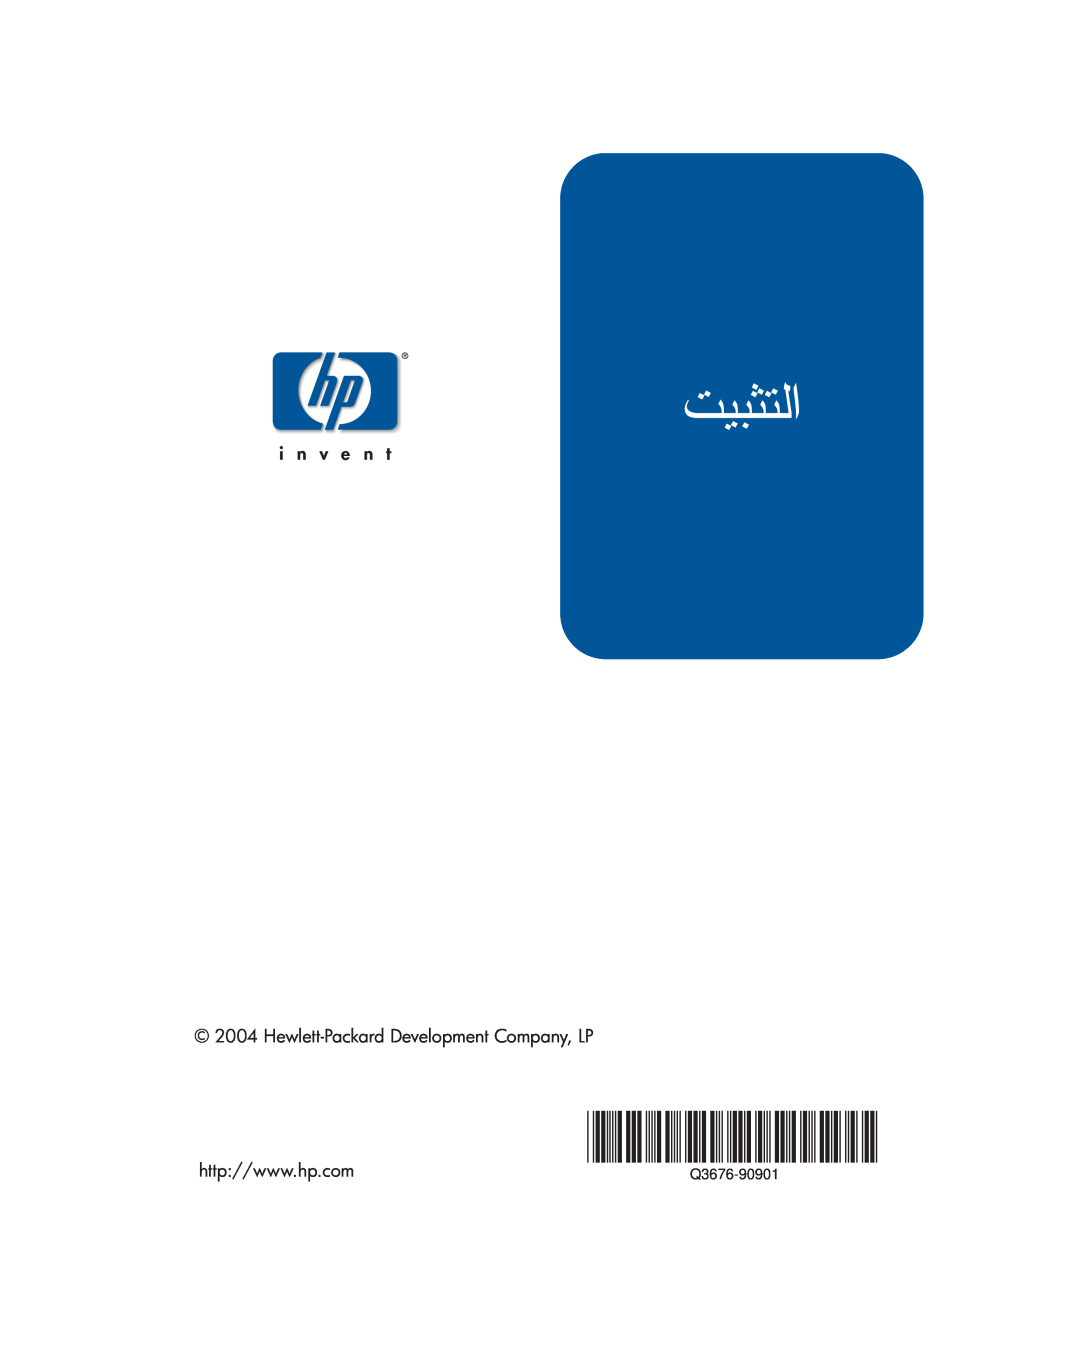 HP Q3675A Image Transfer Kit, Q3676A 110V Image Fuser Kit Q3676-90901 Q3676-90901, Hewlett-Packard Development Company, LP 